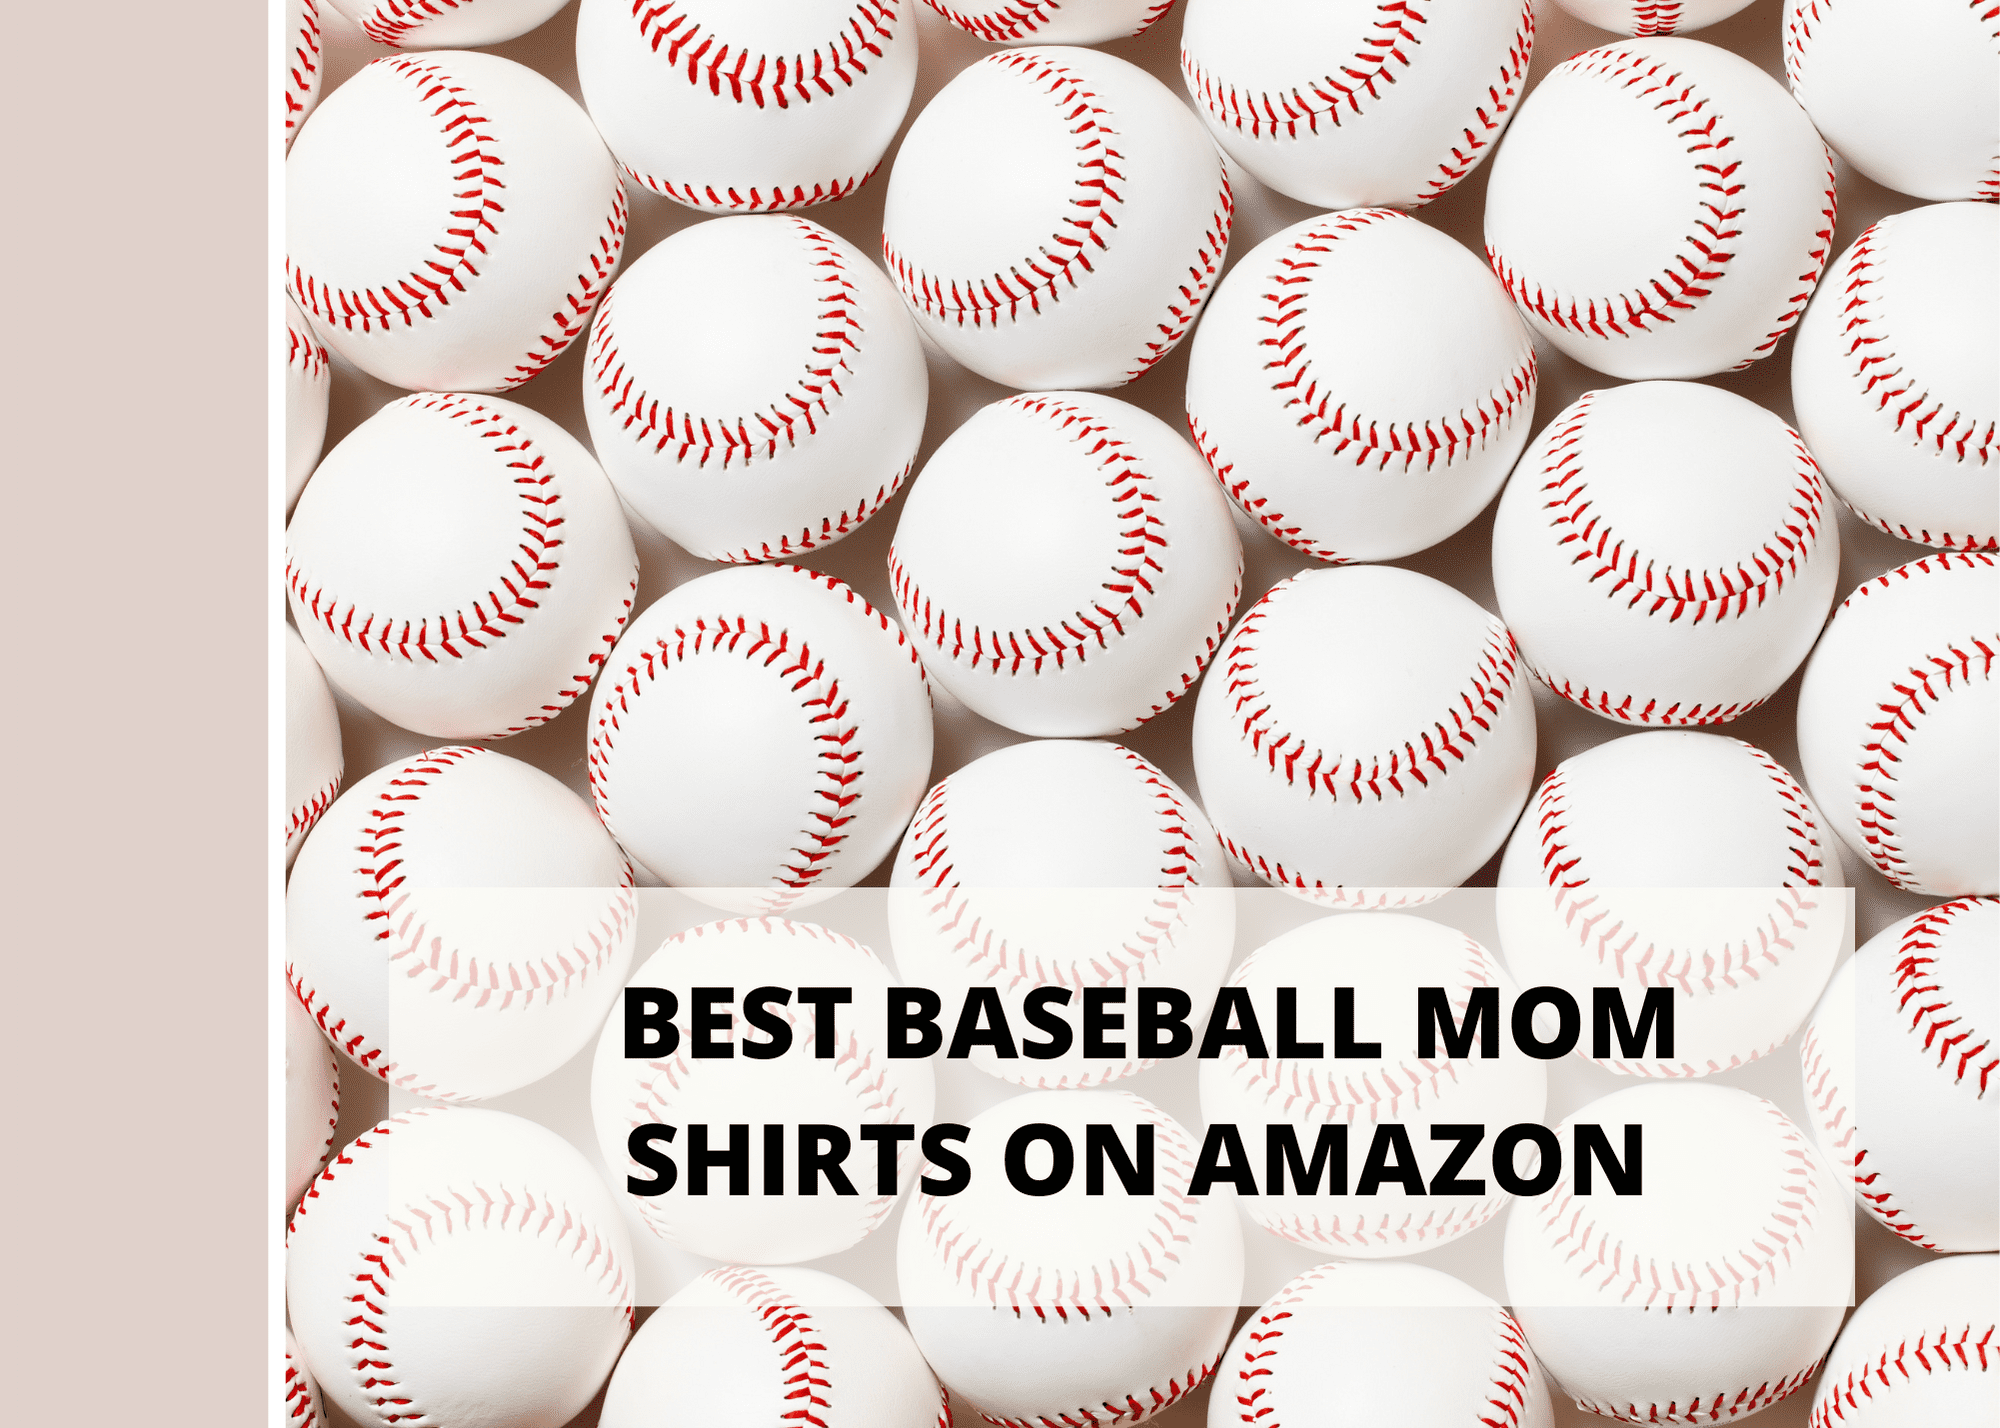 Best baseball mom shirts on Amazon